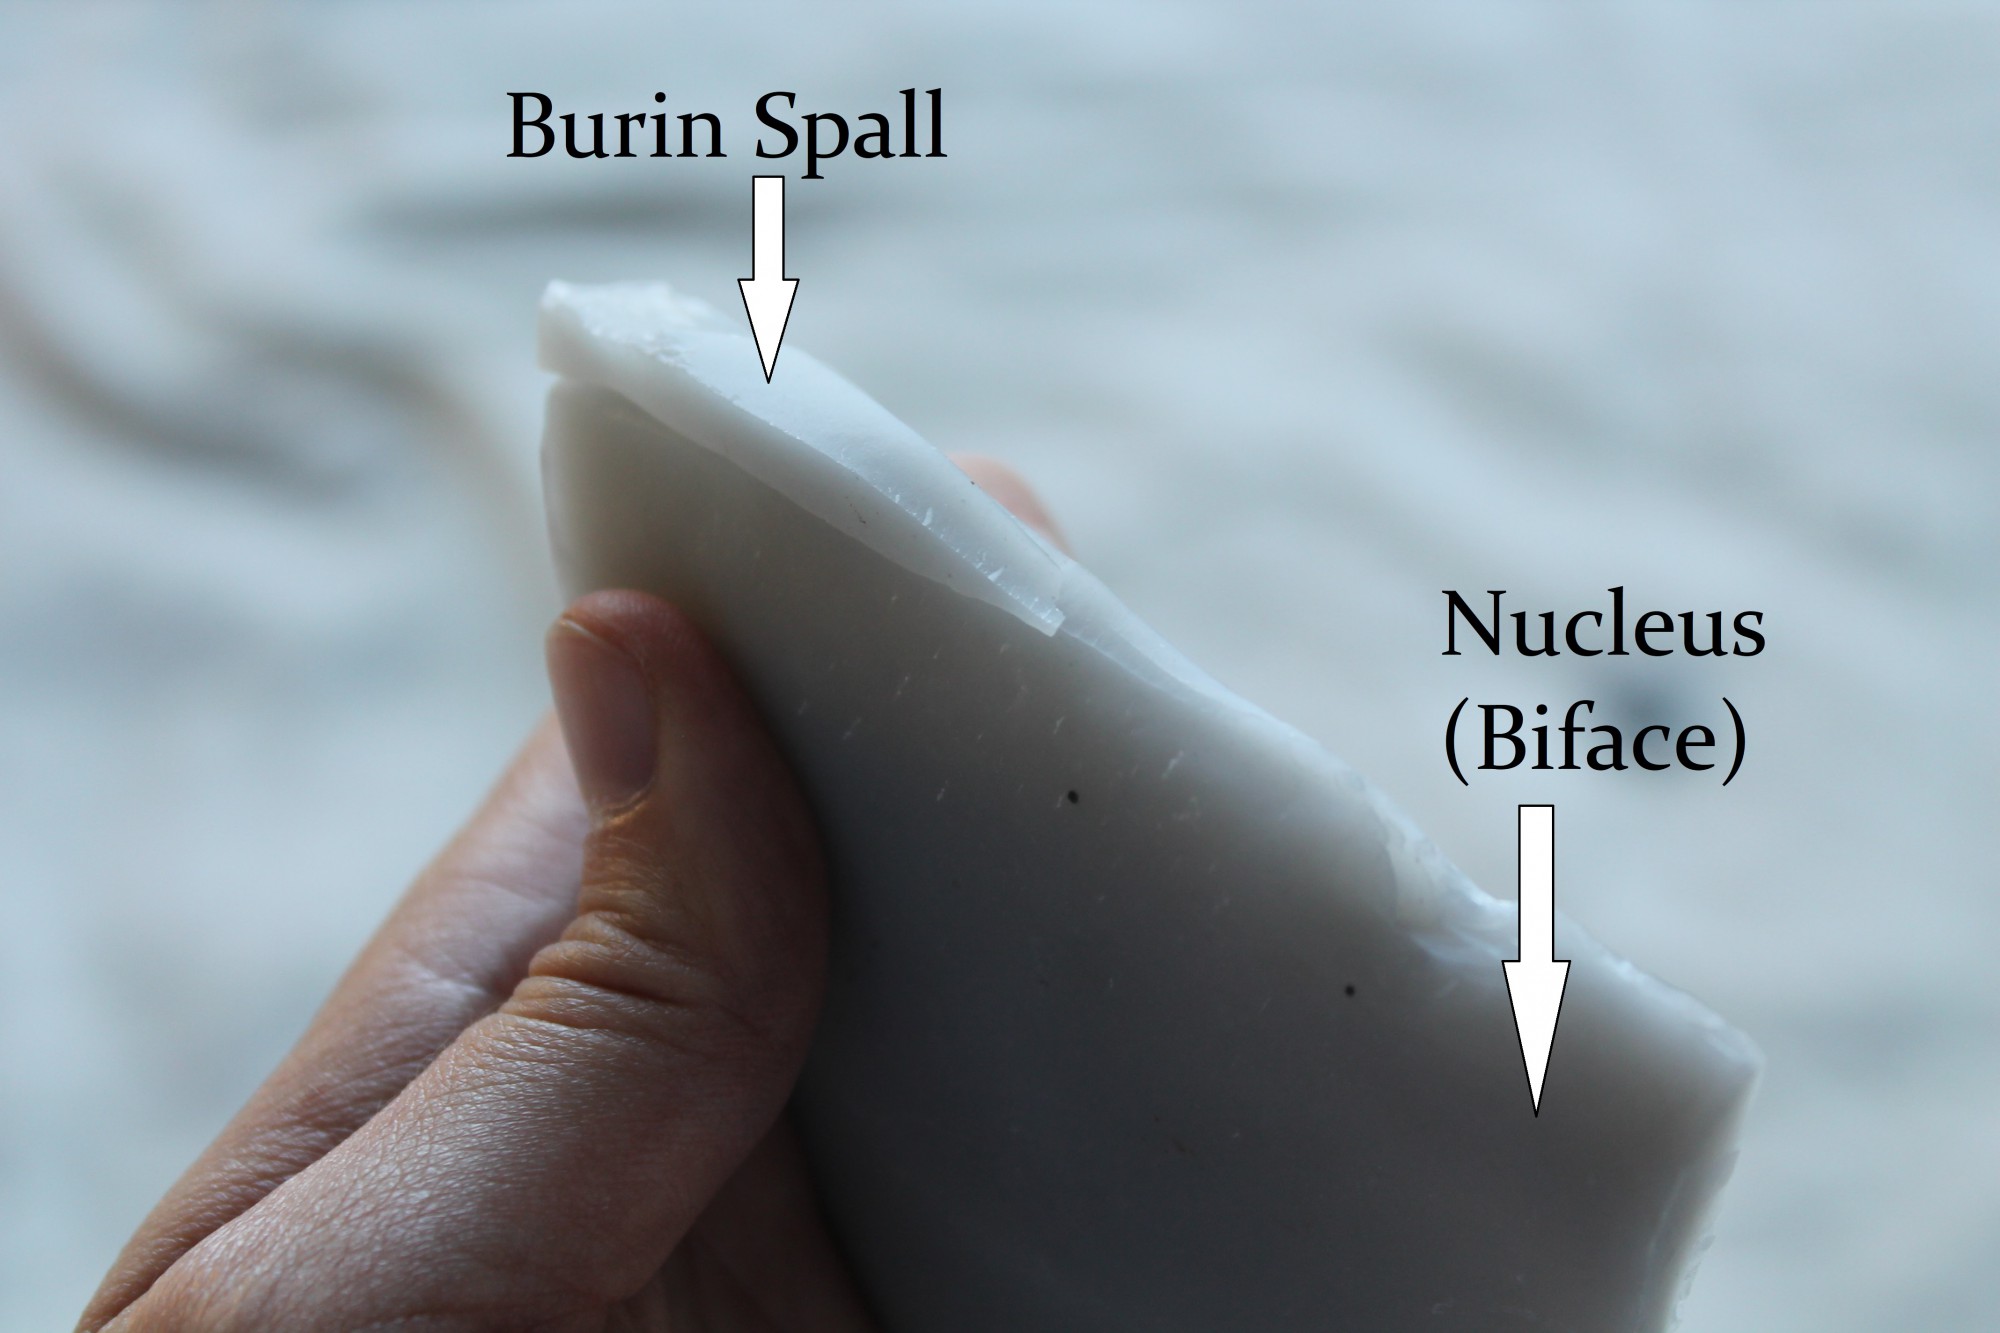 Burin spall on nucleus